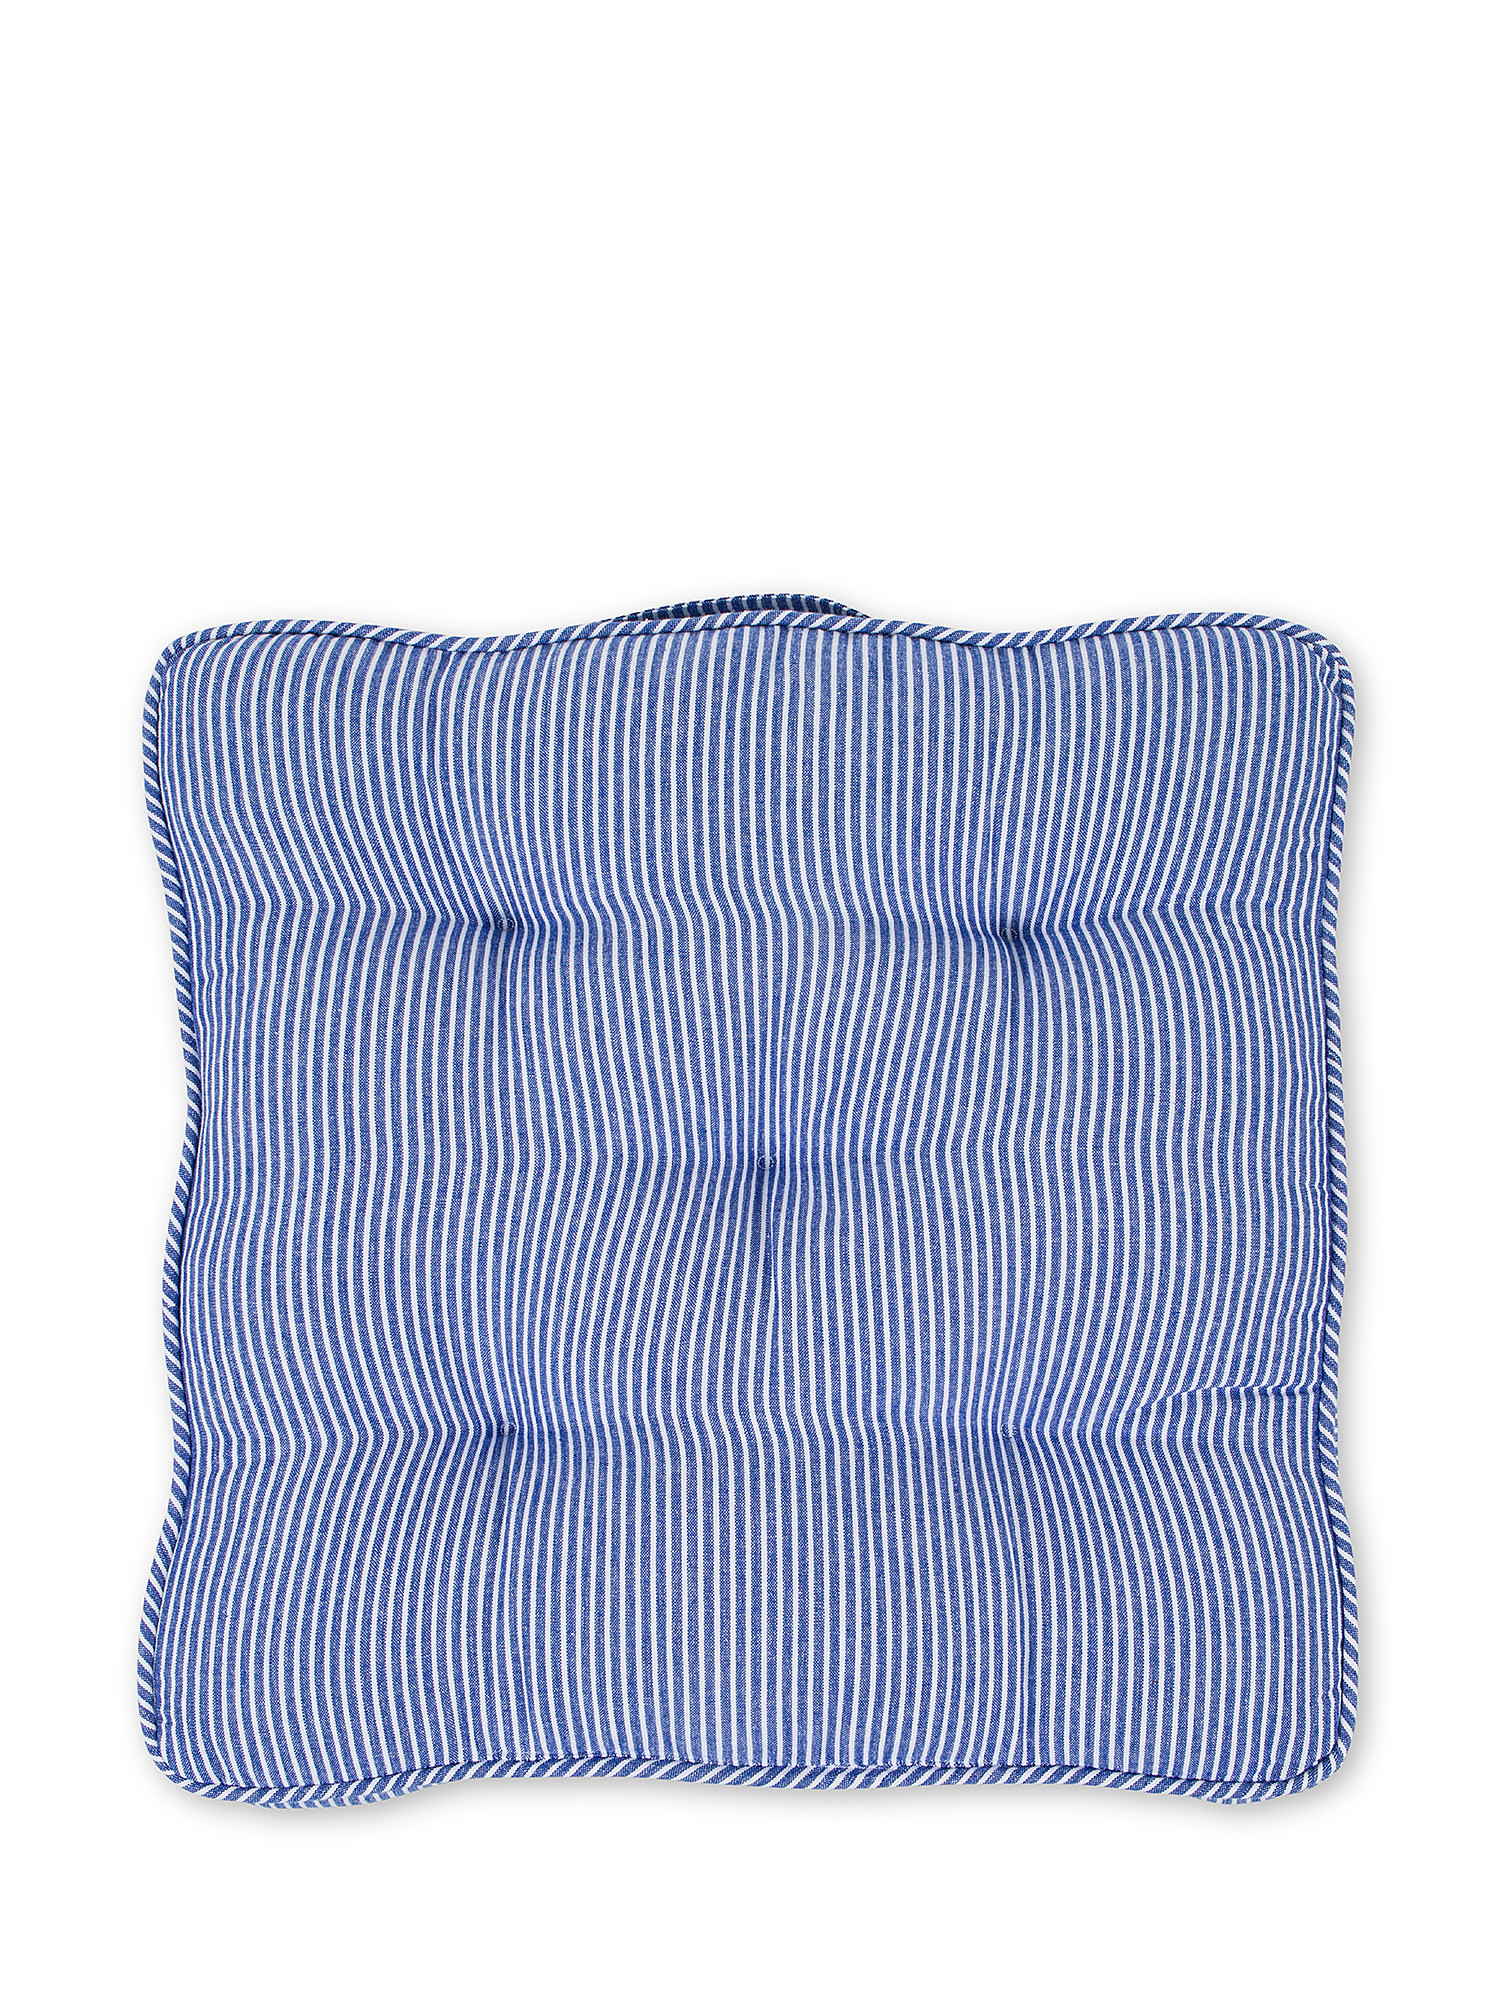 Mattress cushion 50x 50 cm, White / Blue, large image number 0